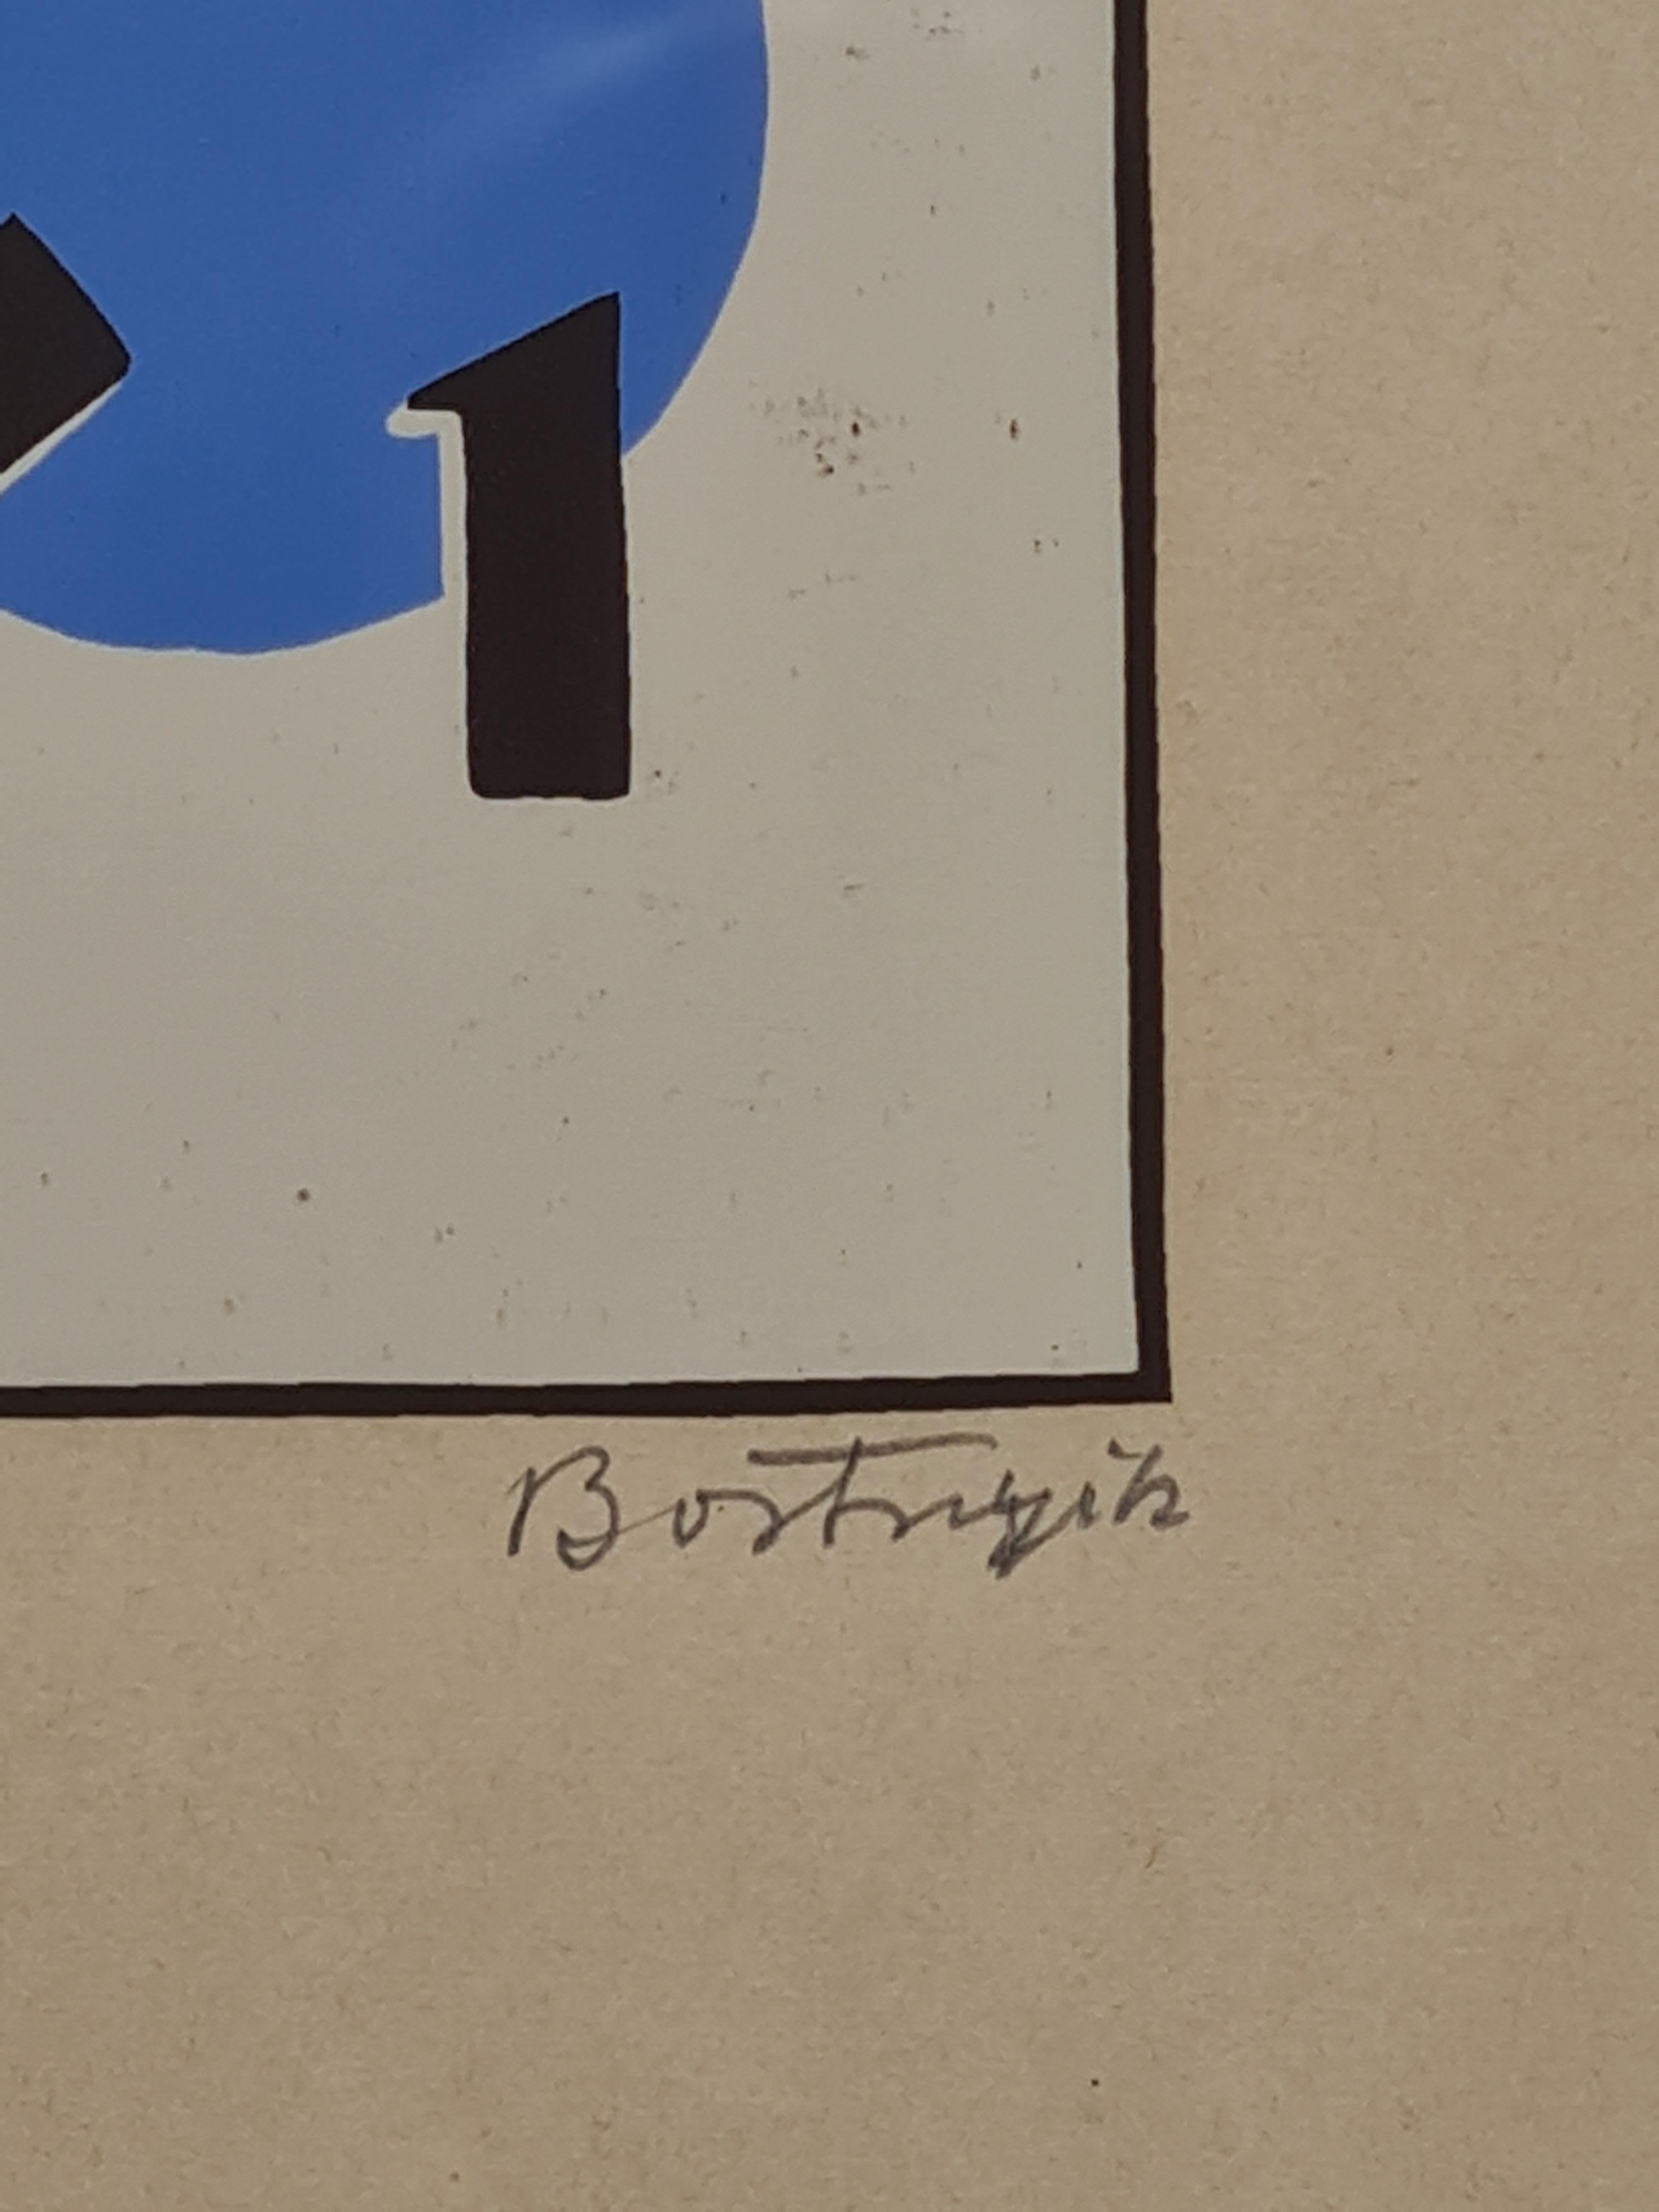 Abstrait constructiviste de l'album MA 1921 - Constructiviste Print par Sandor Bortnyik